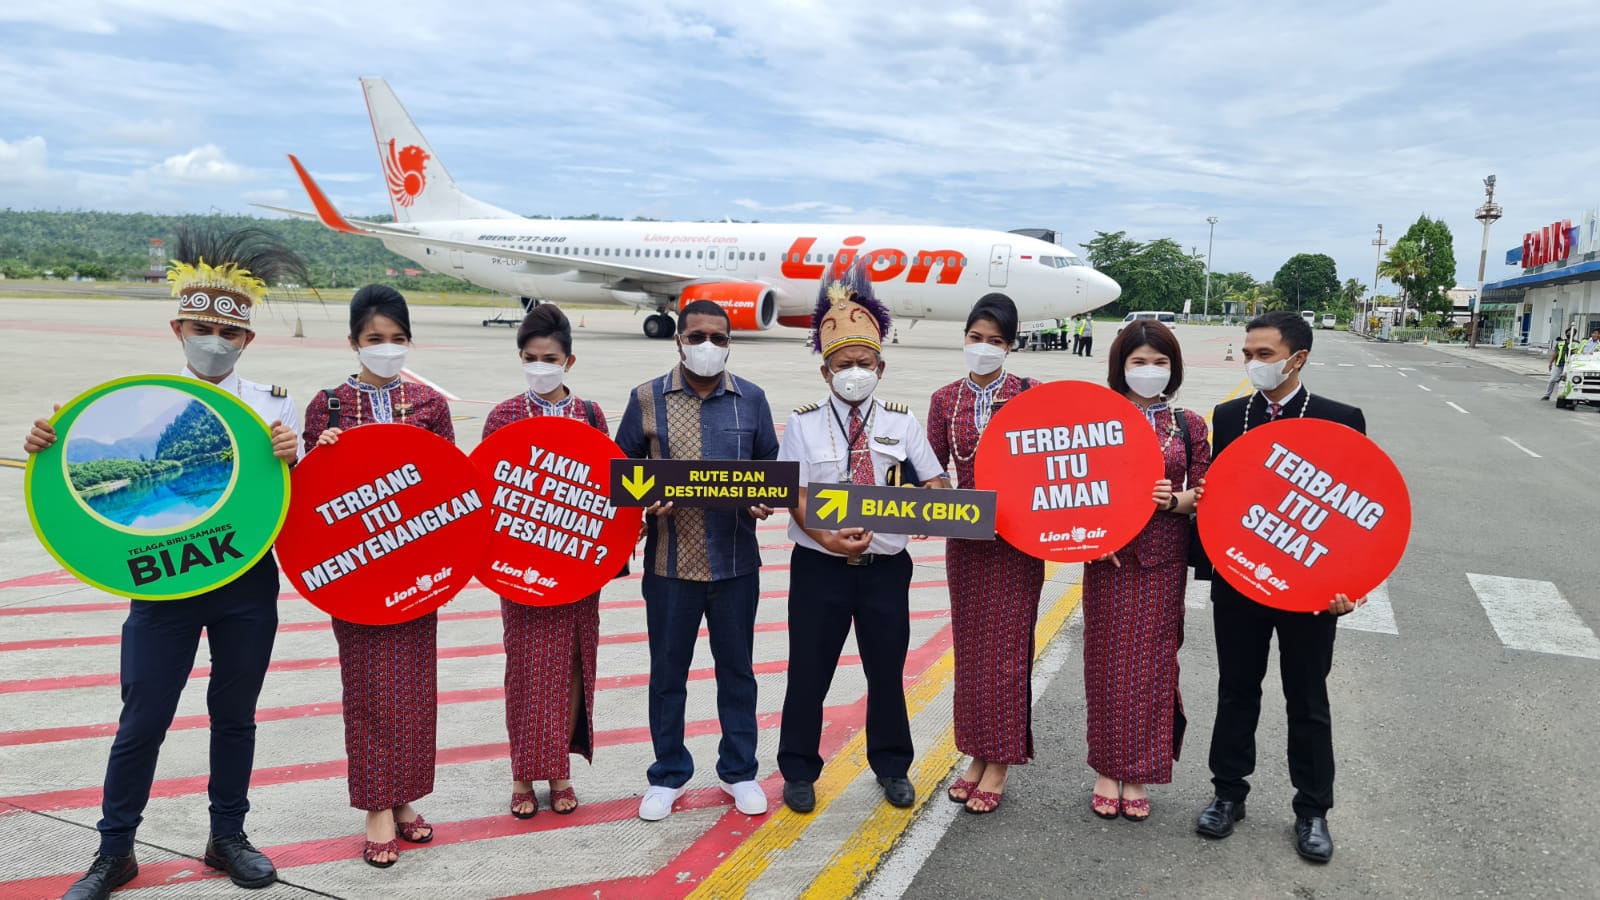 Lion Air Membuka Rute dan Destinasi Baru: BIAK Terbang Langsung dari MAKASSAR dan JAYAPURA